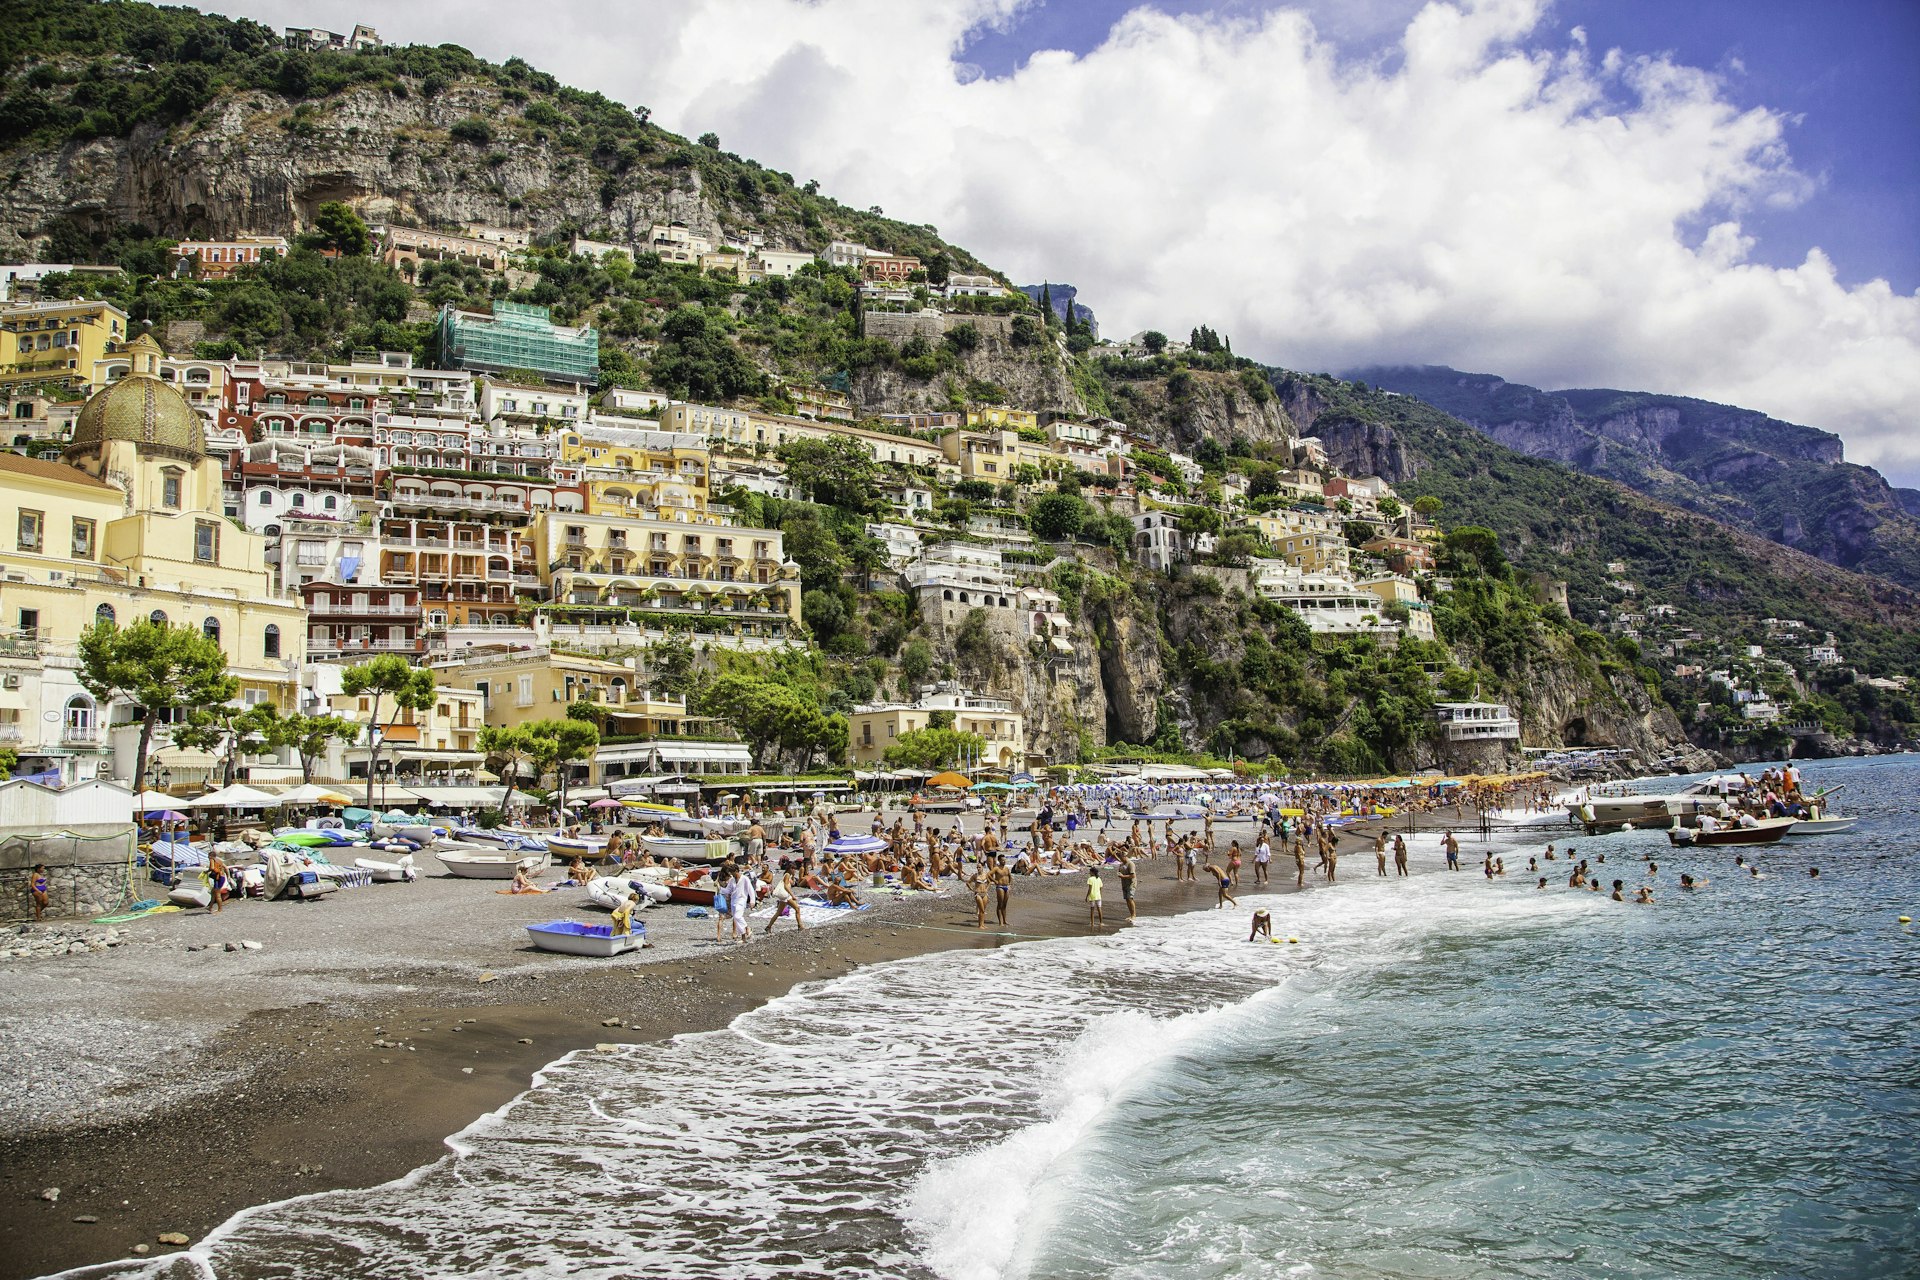 People on the beach at Positano on the Amalfi Coast, Italy